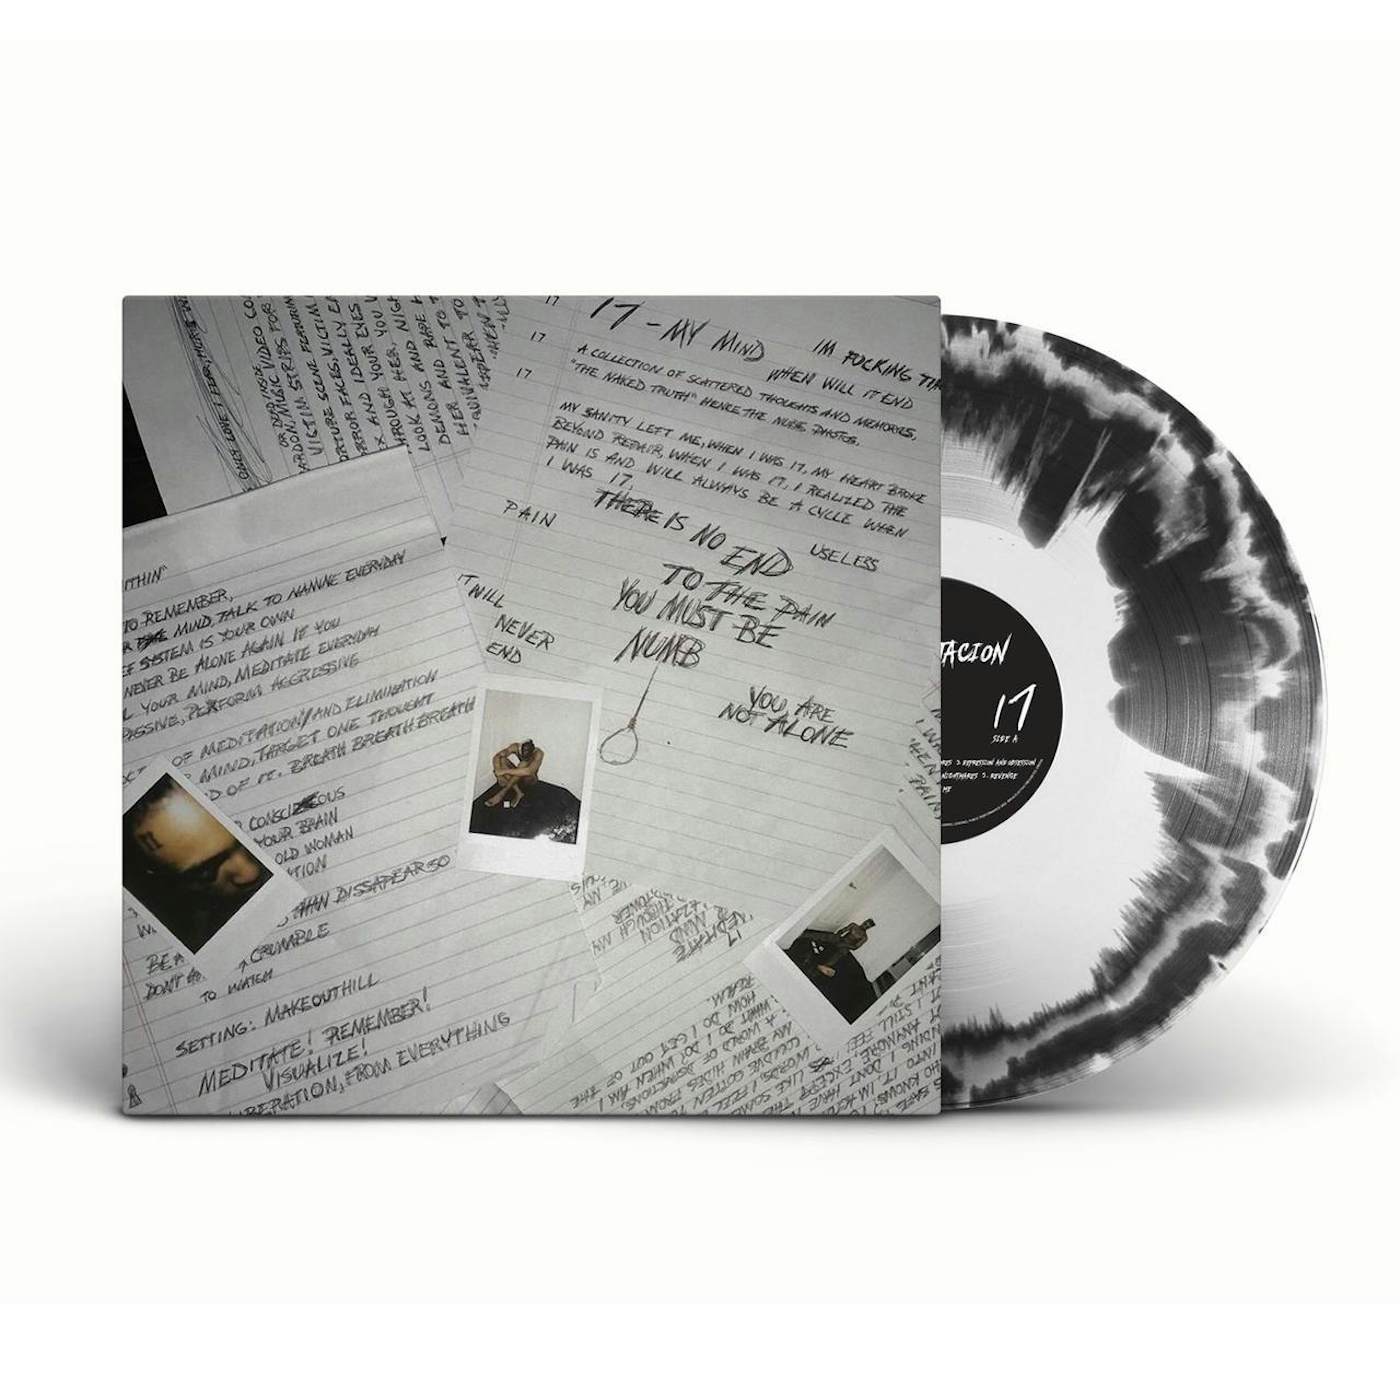 XXXTENTACION 17 - Limited Edition Black & White Colored Vinyl Record